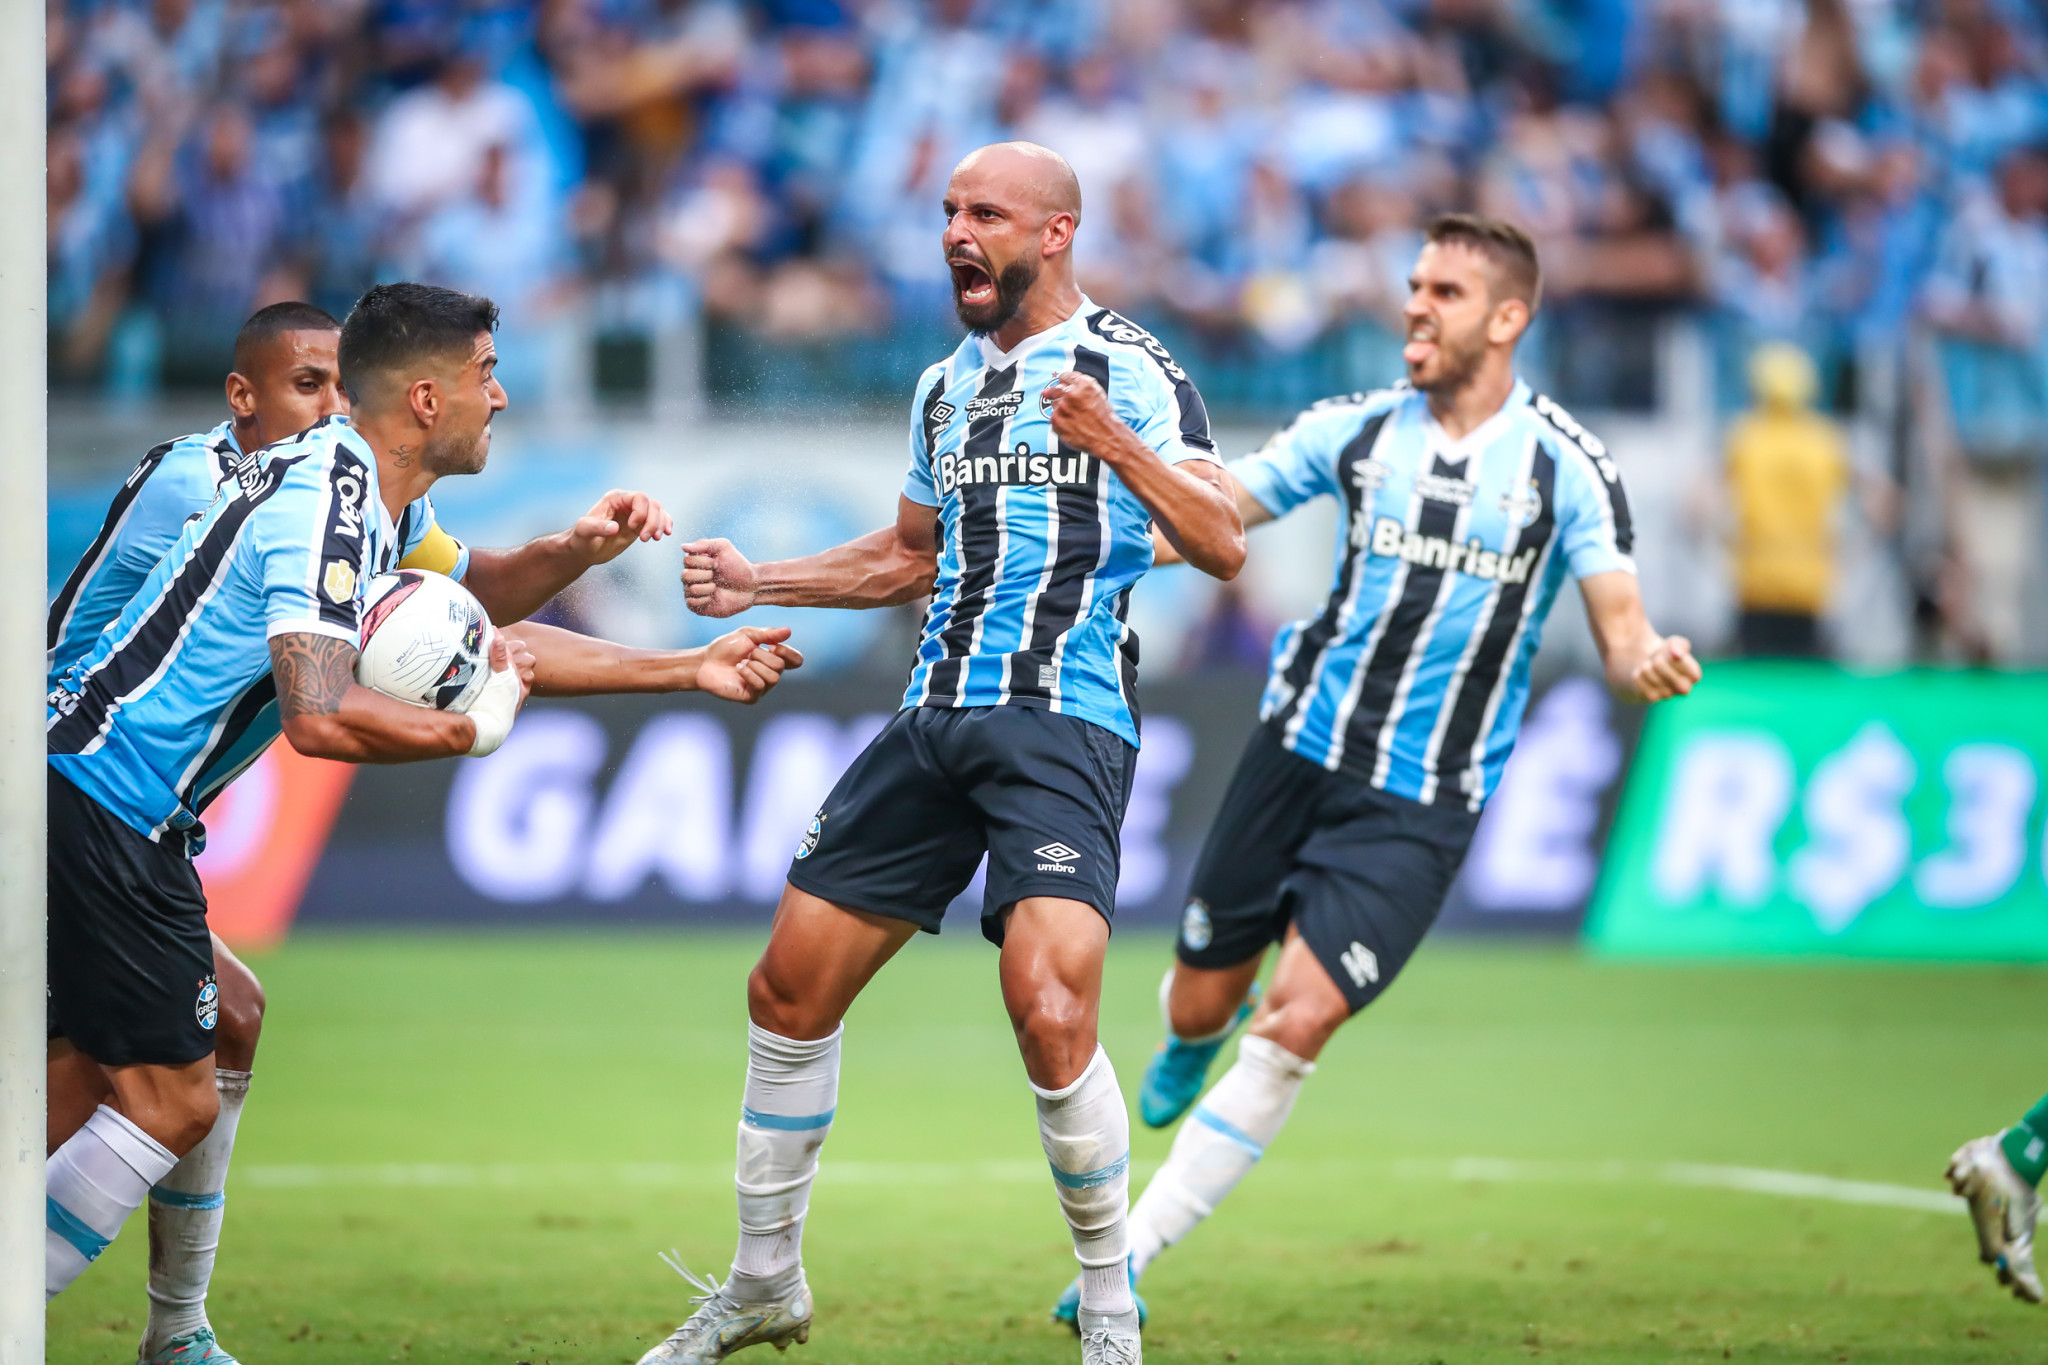 Ypiranga vs Grêmio: Serviço de jogo - Ypiranga Futebol Clube